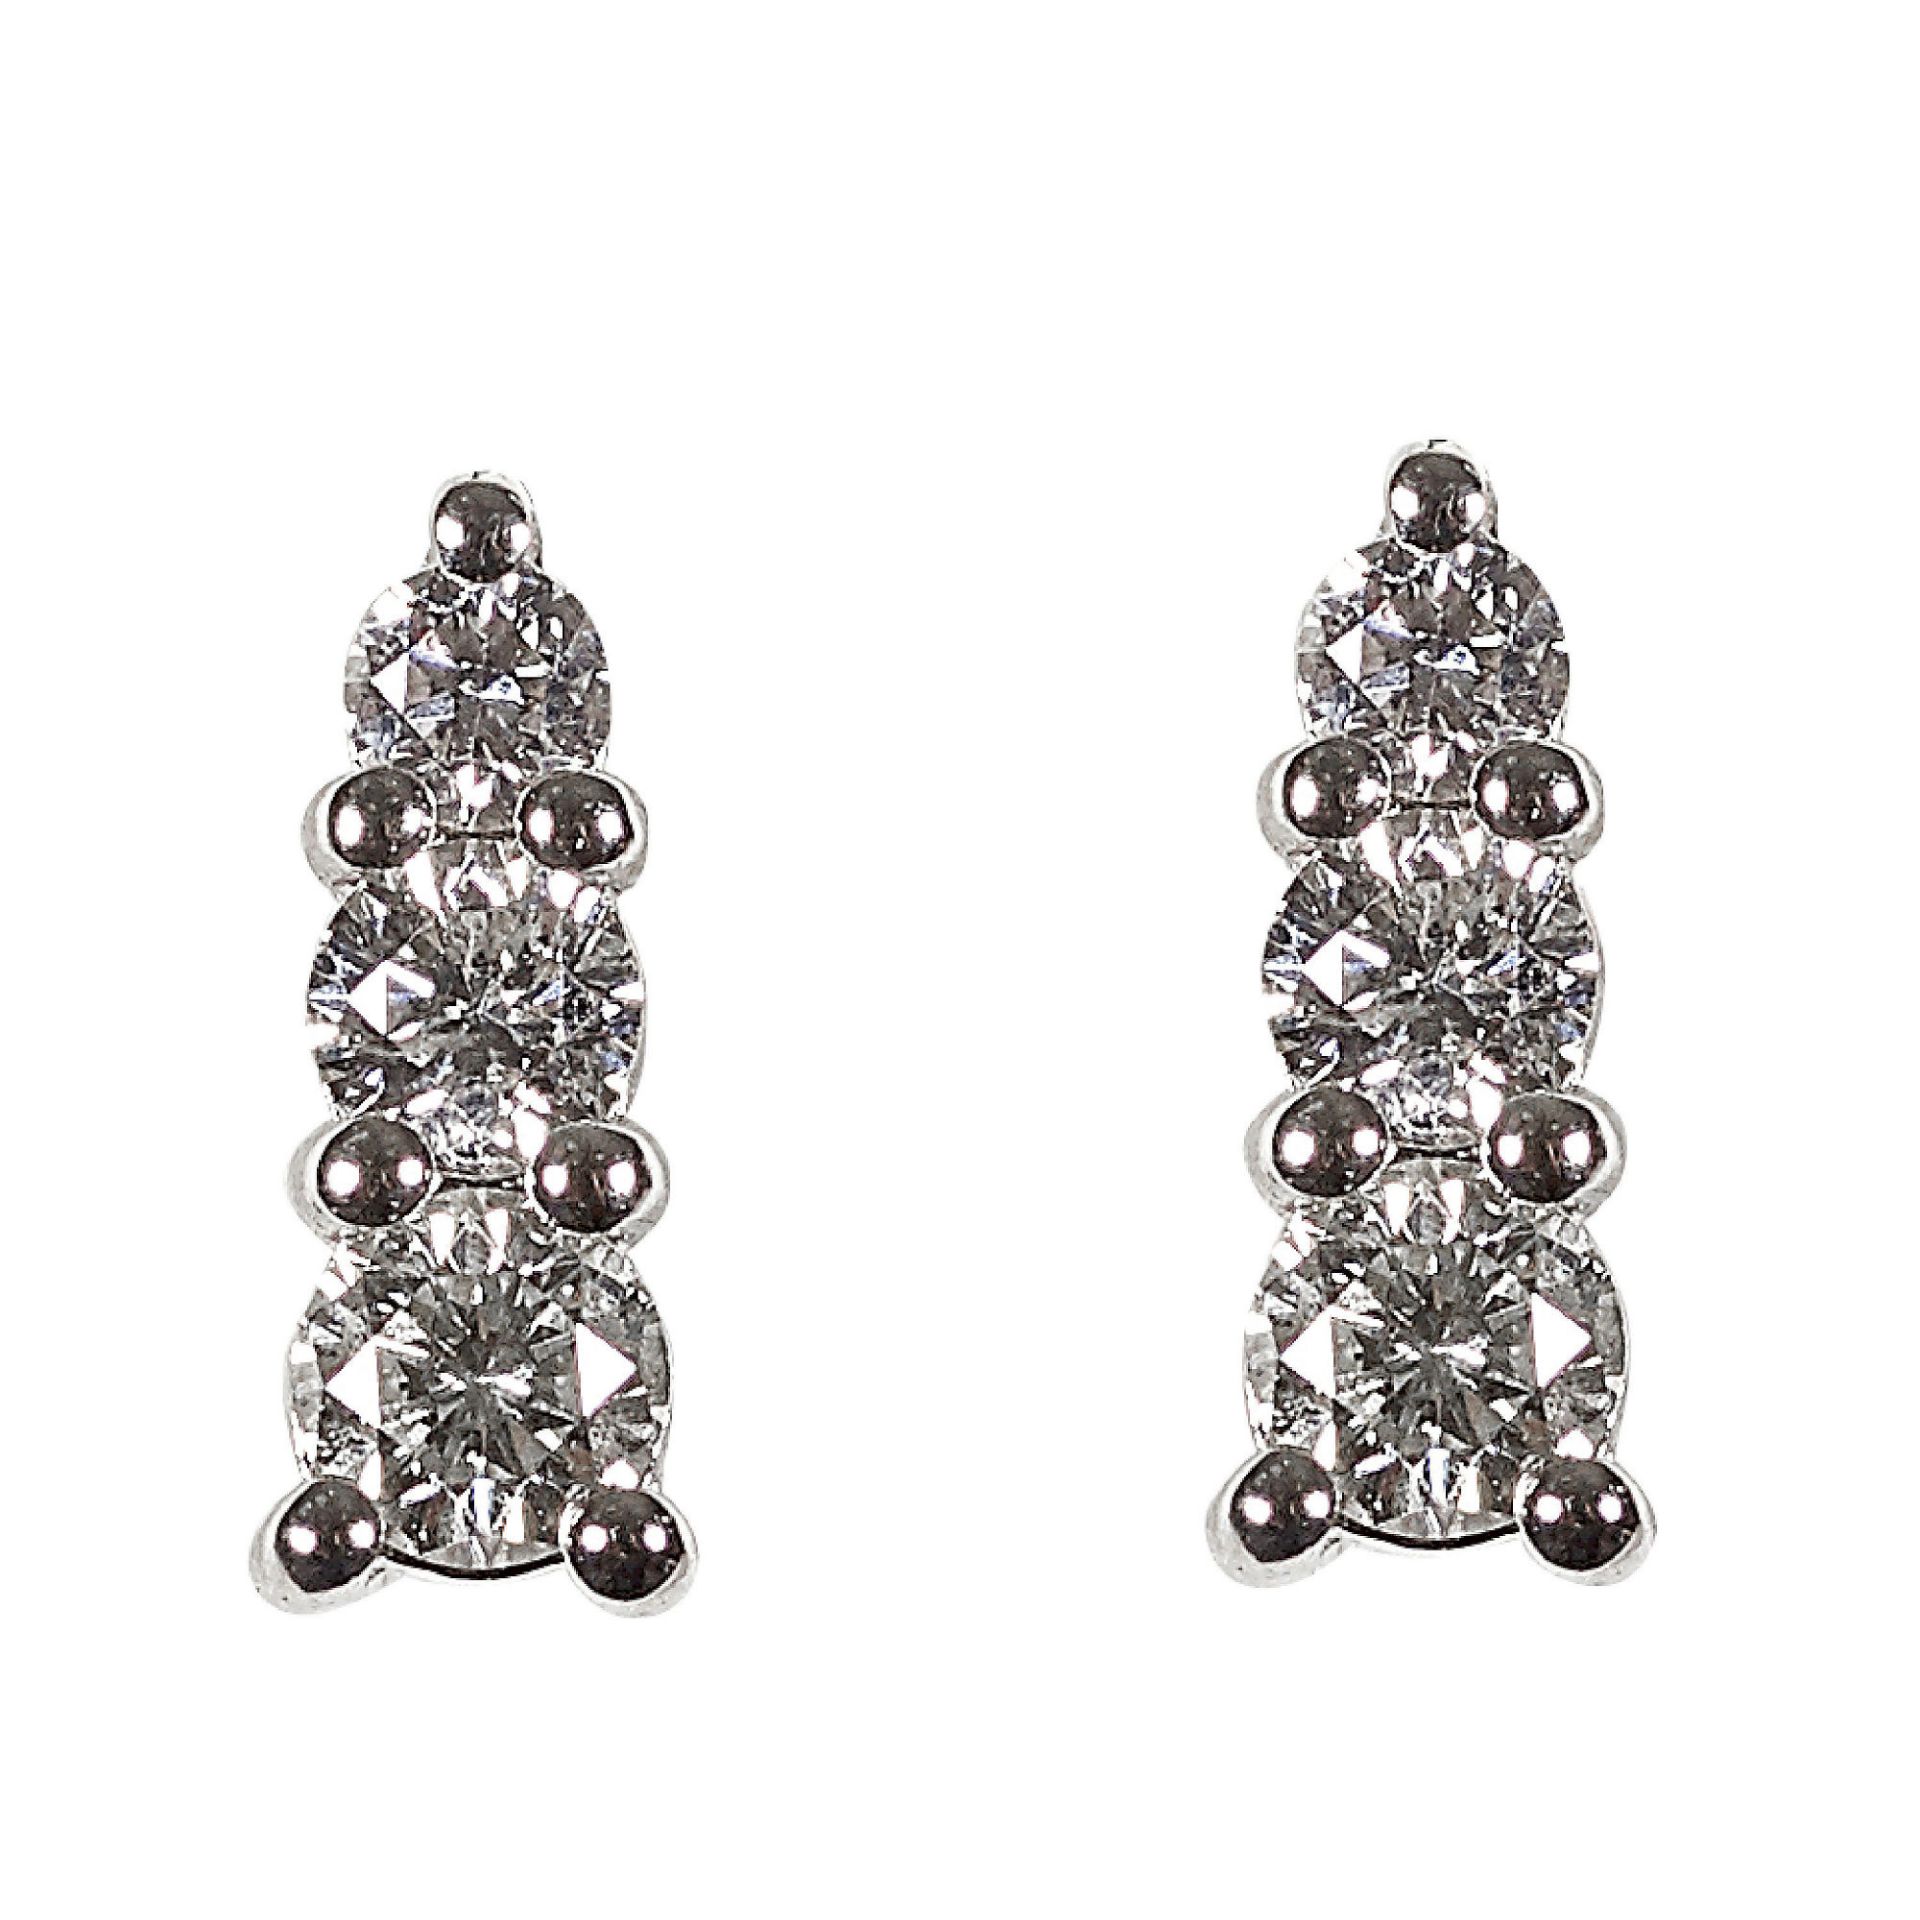 DIAMANT-OHRSTECKER / Diamond earrings